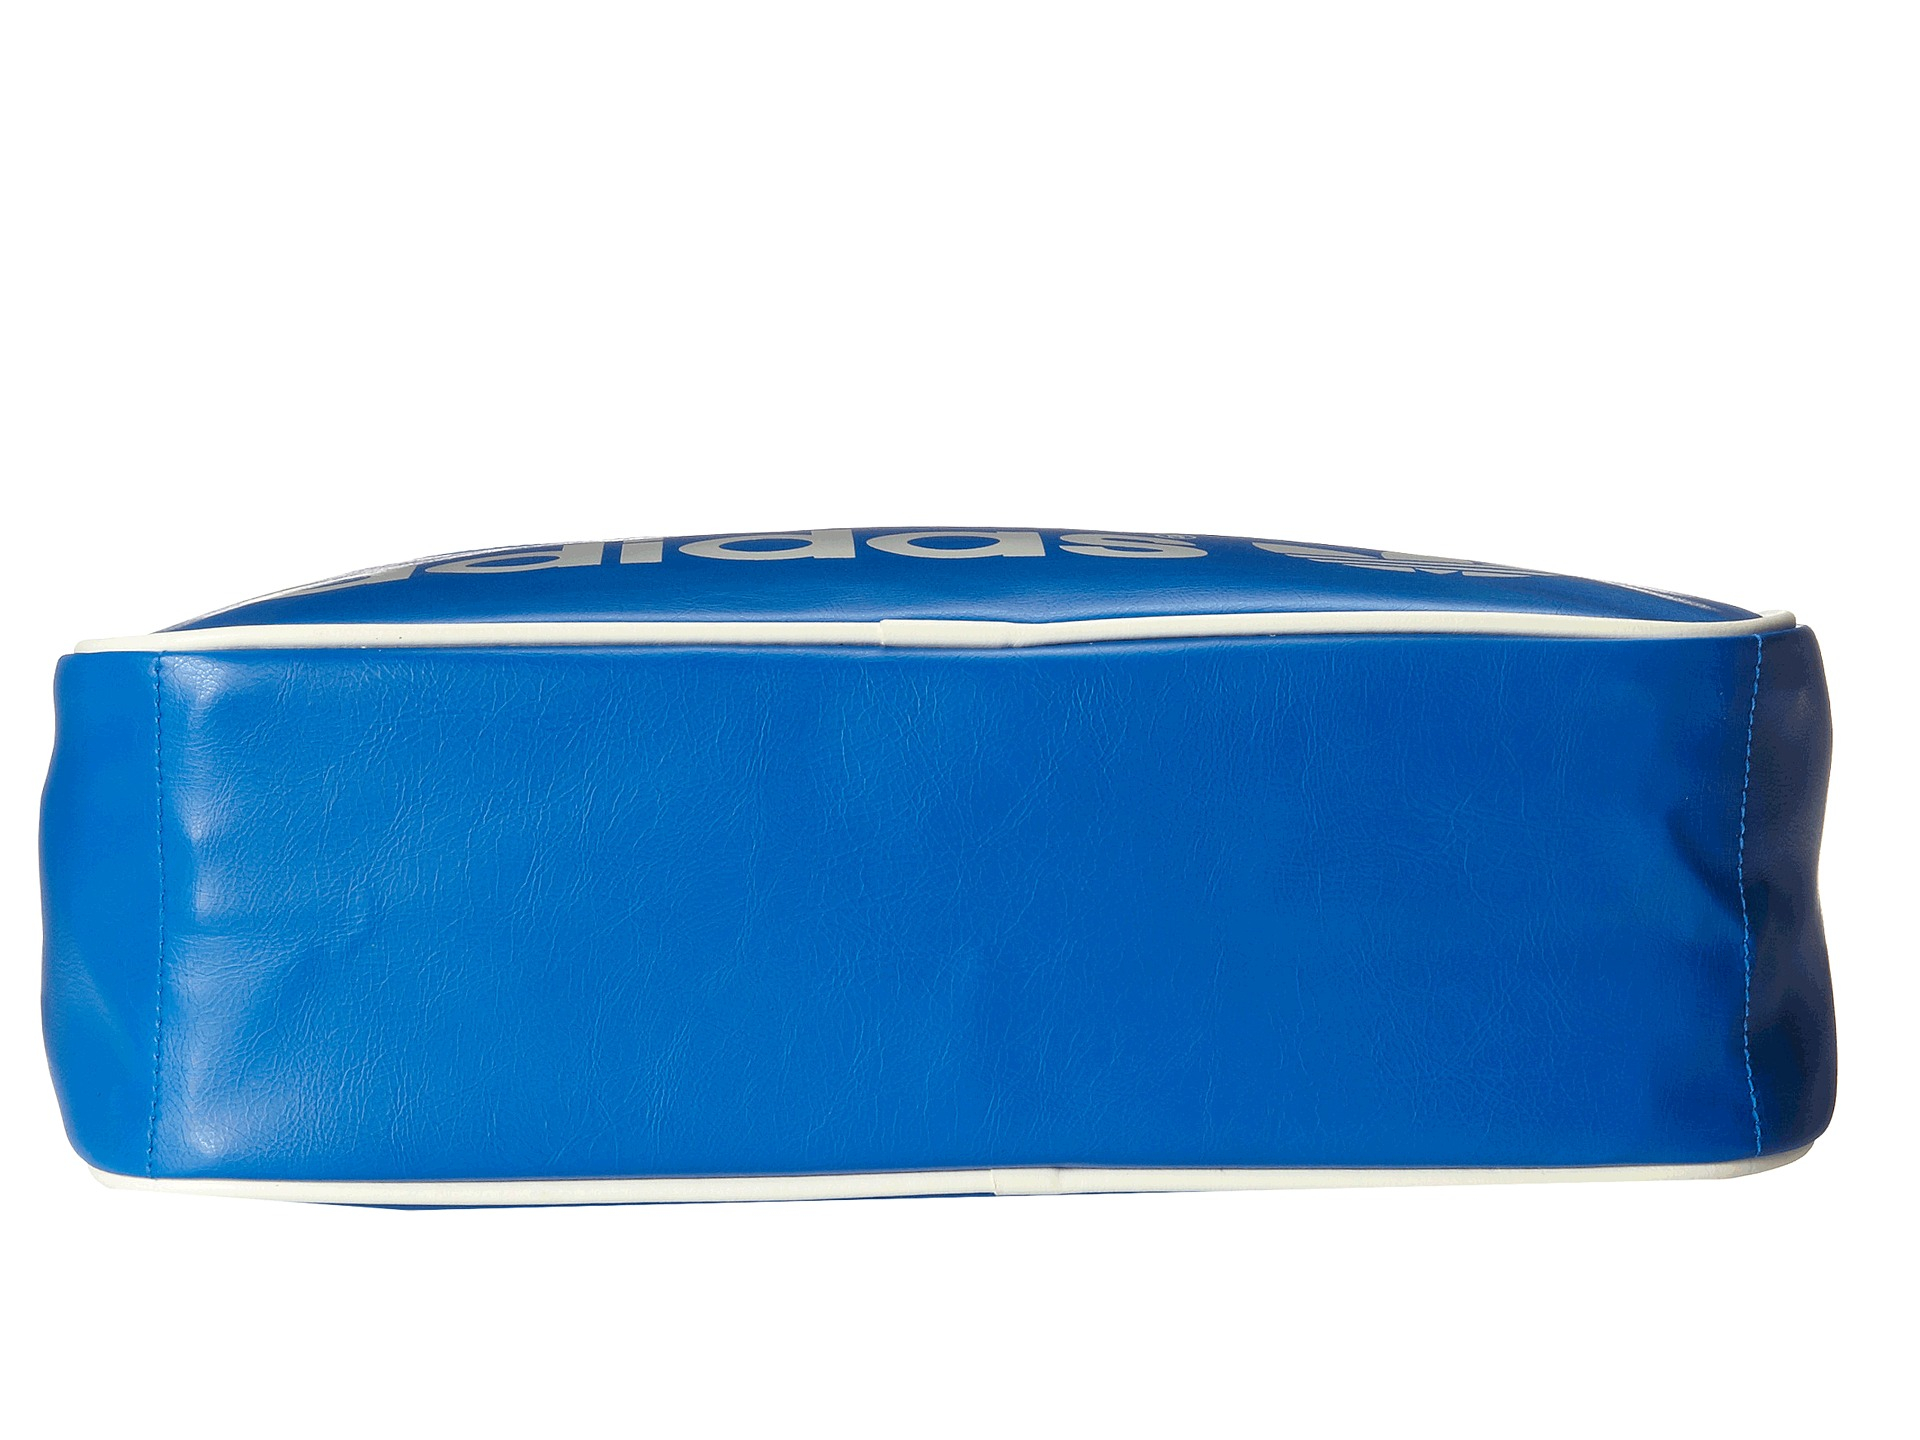 adidas Originals Ac Airliner Bag in Blue for Men - Lyst